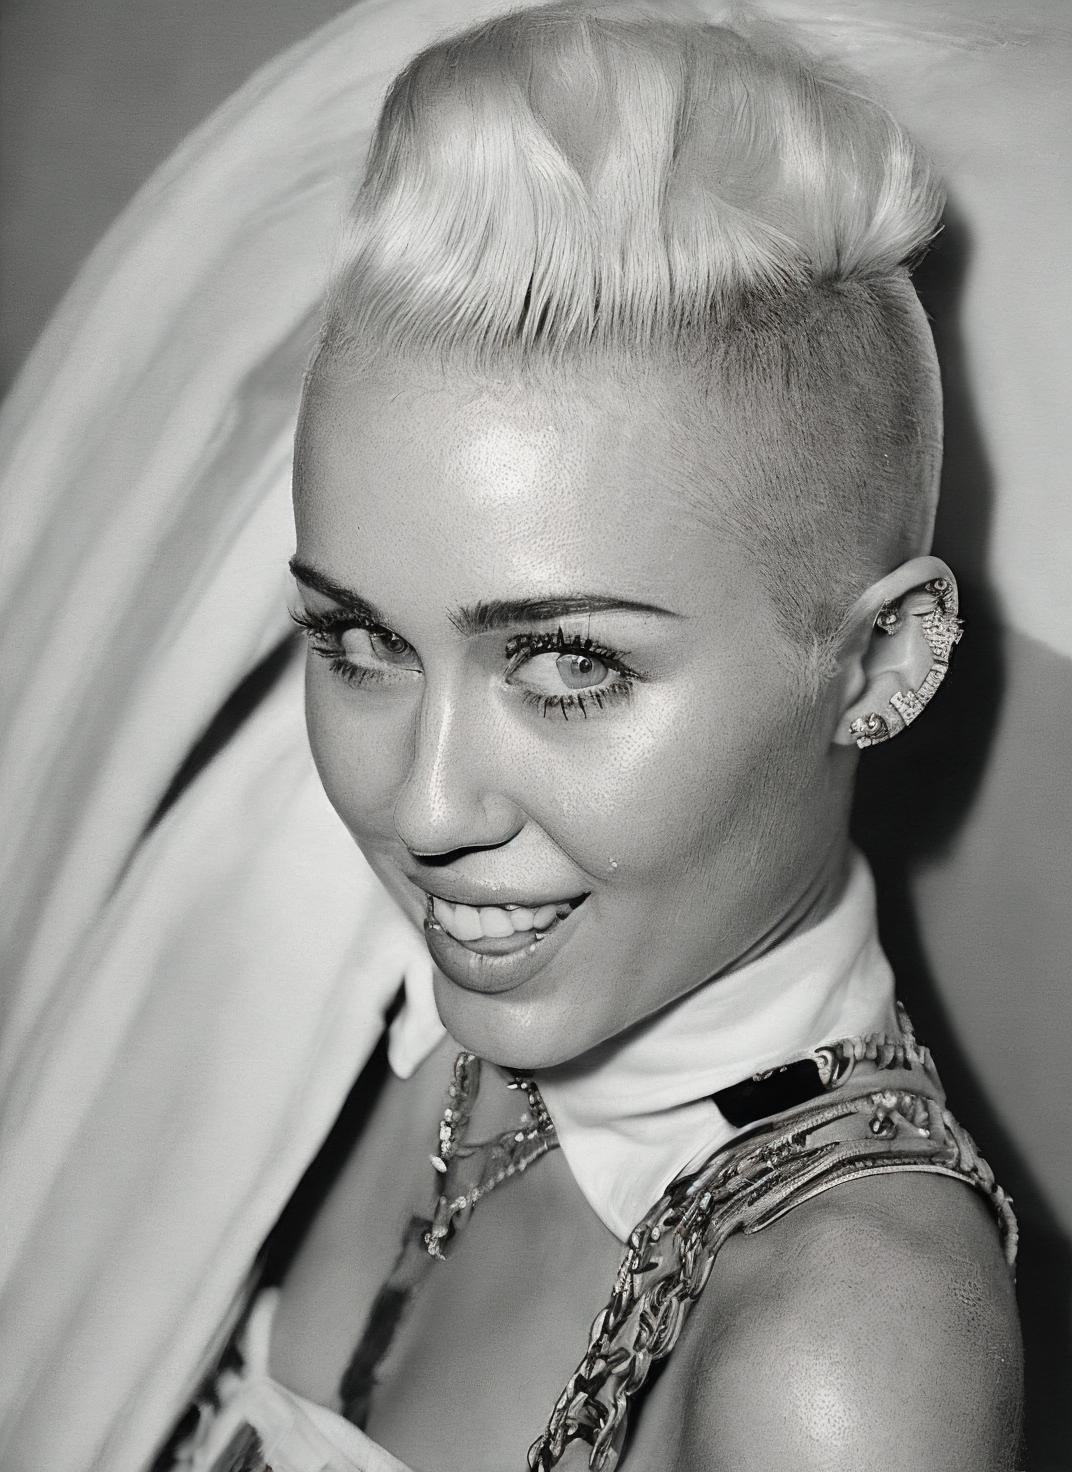 Miley Cyrus image by malcolmrey